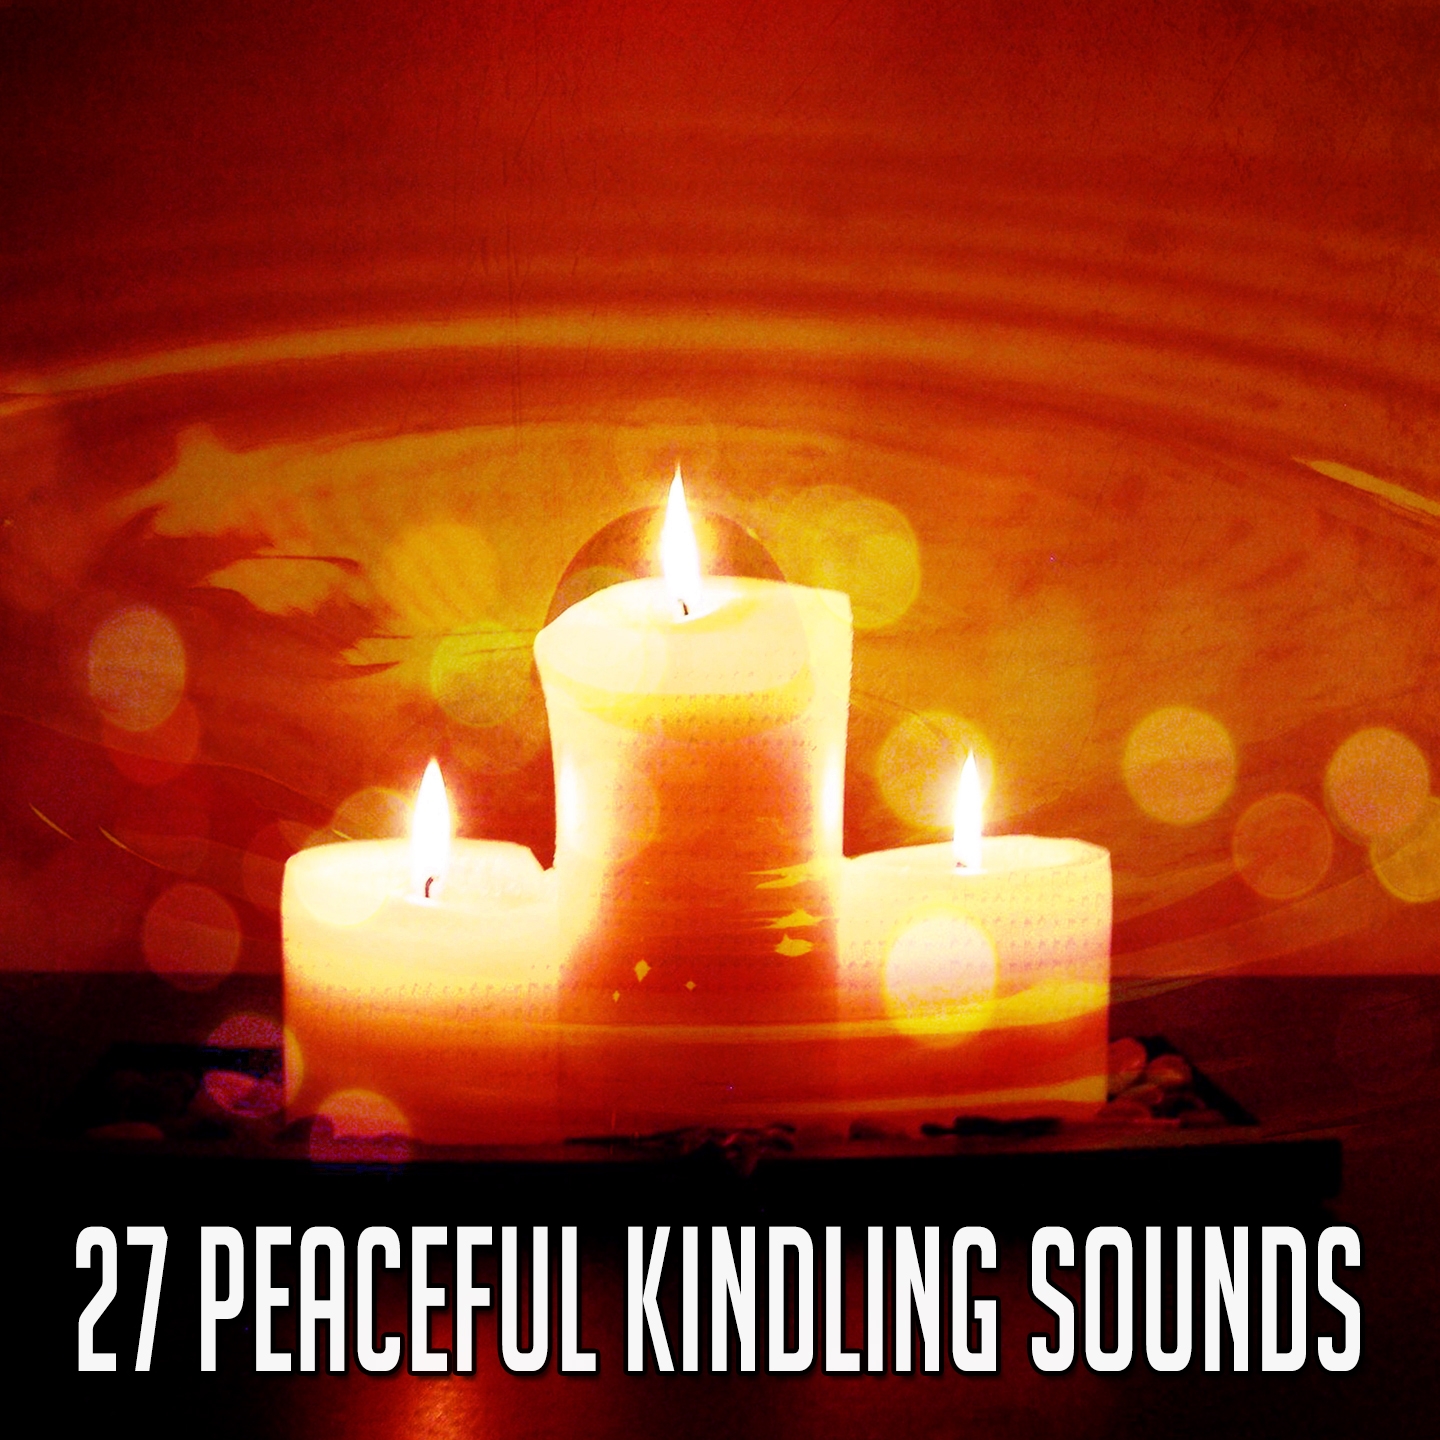 27 Peaceful Kindling Sounds